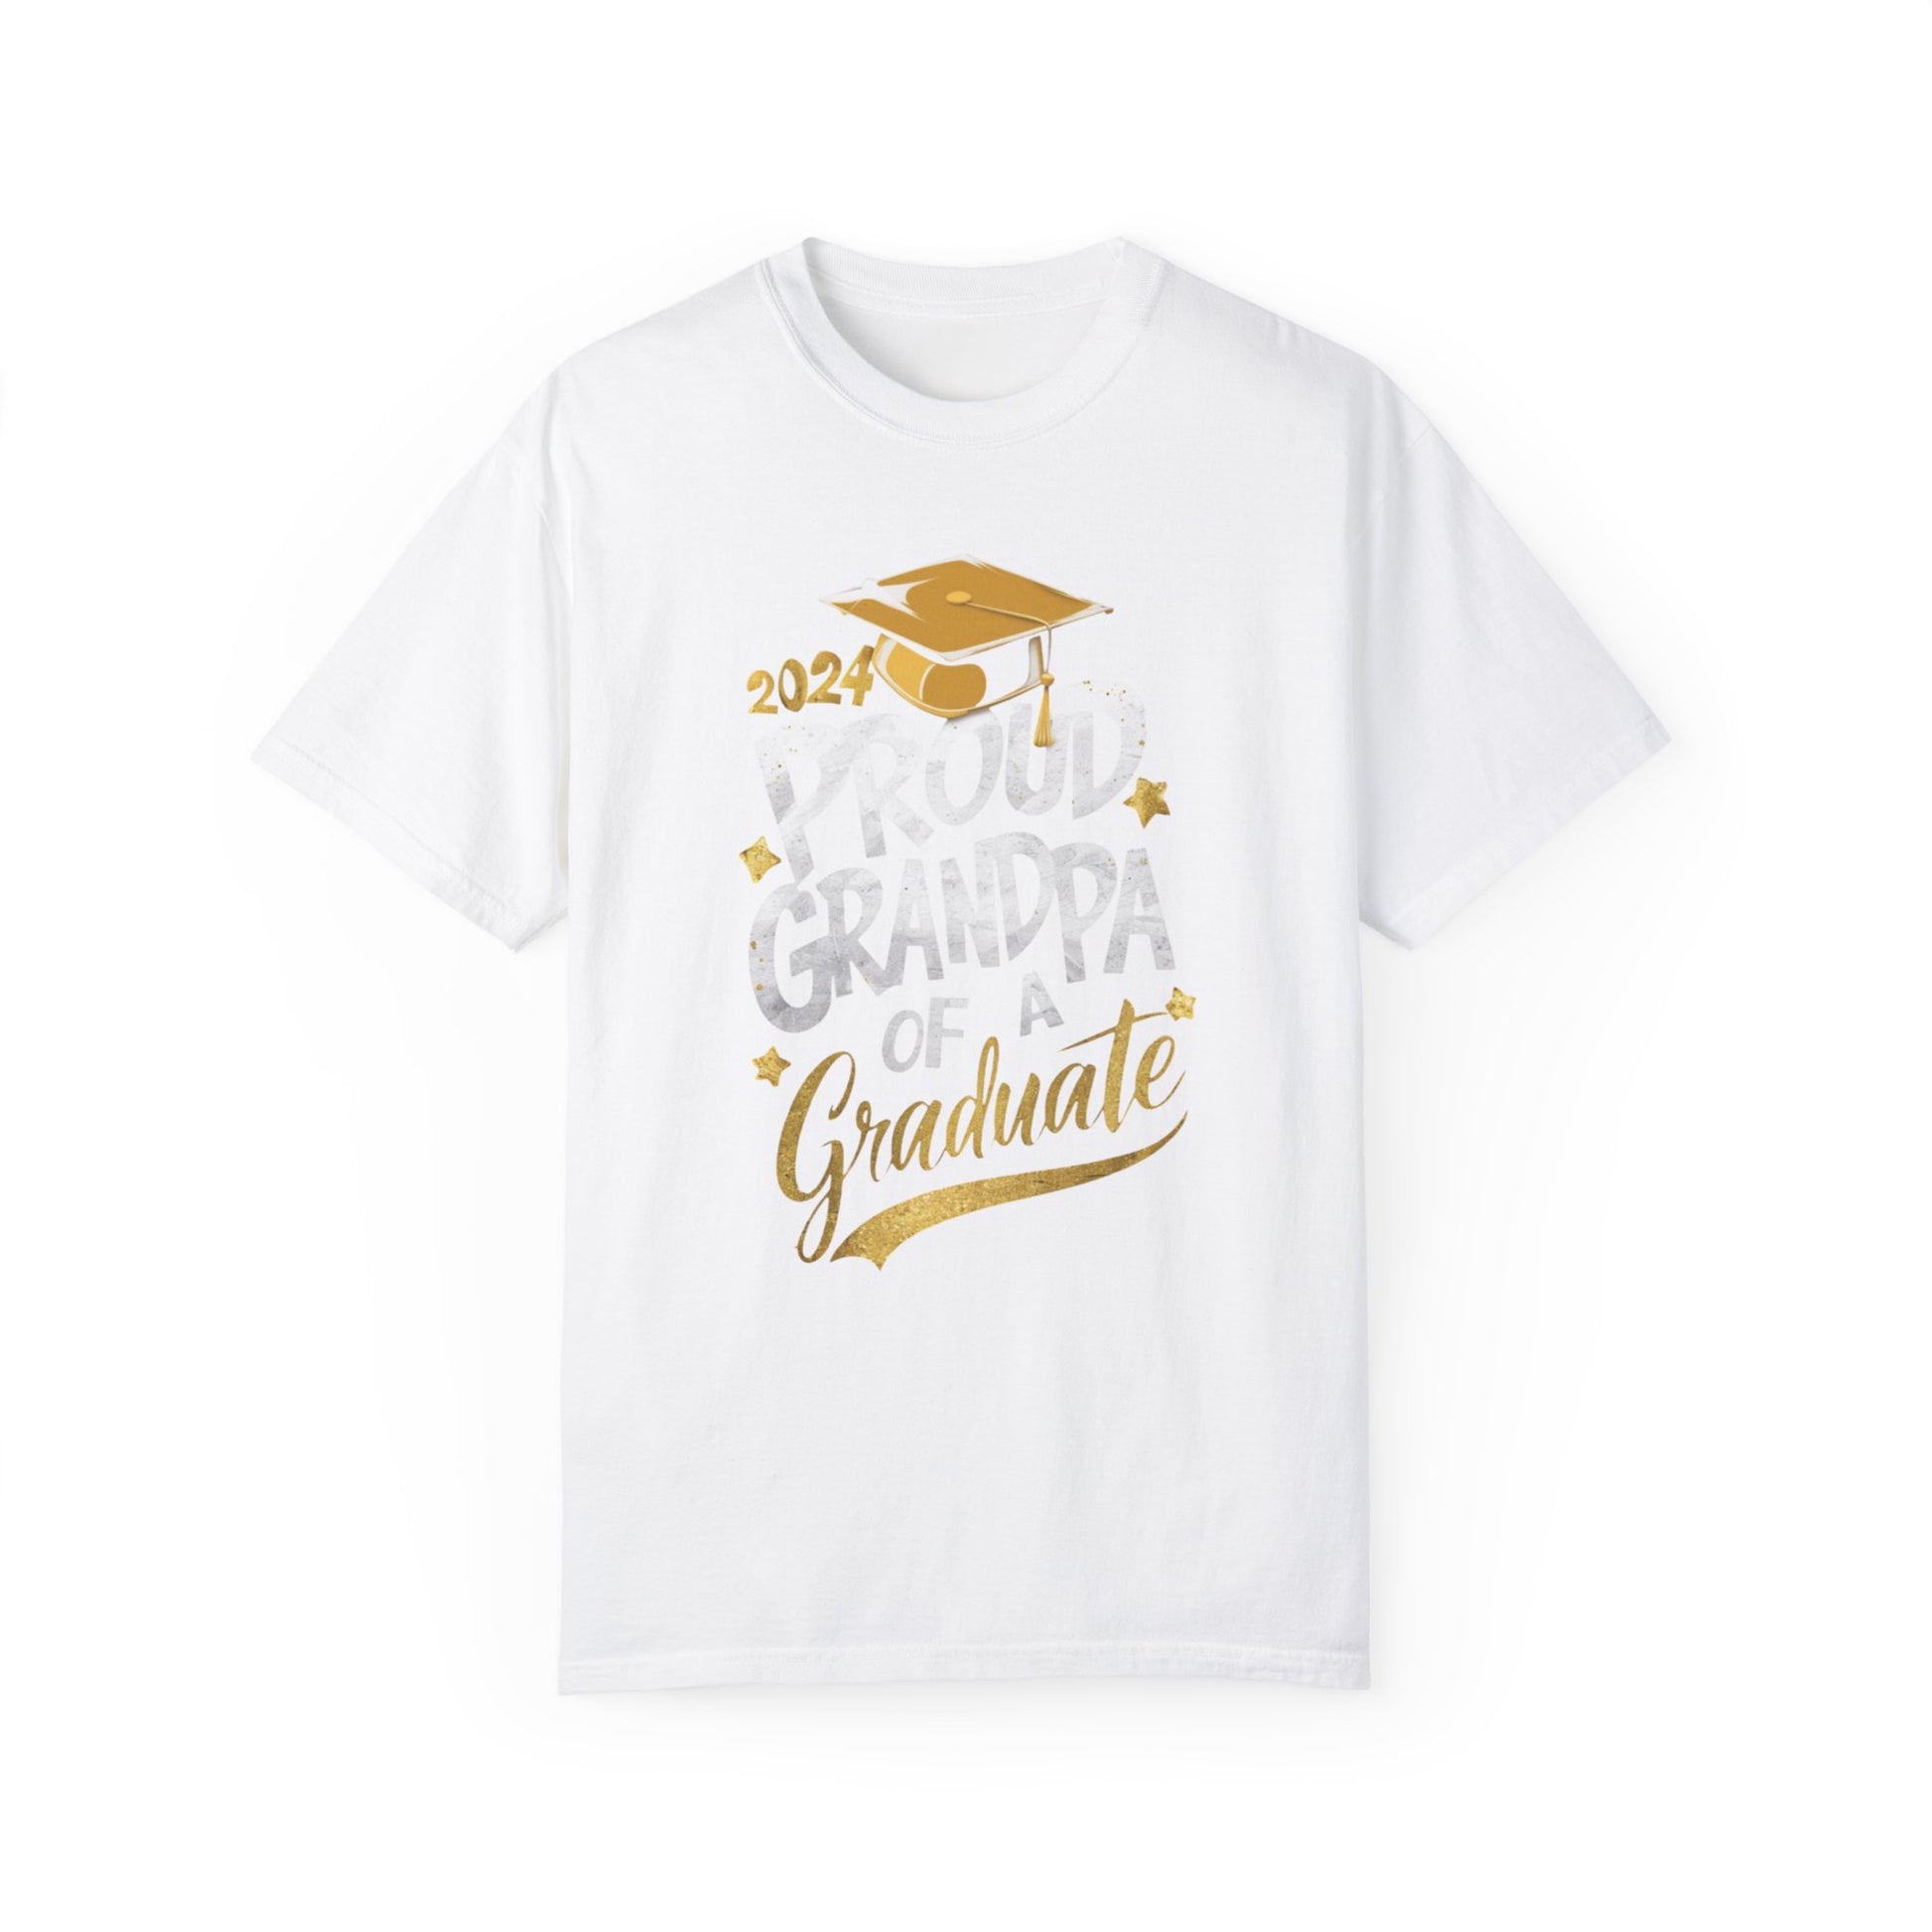 Proud Grandpa of a 2024 Graduate Unisex Garment-dyed T-shirt Cotton Funny Humorous Graphic Soft Premium Unisex Men Women White T-shirt Birthday Gift-3